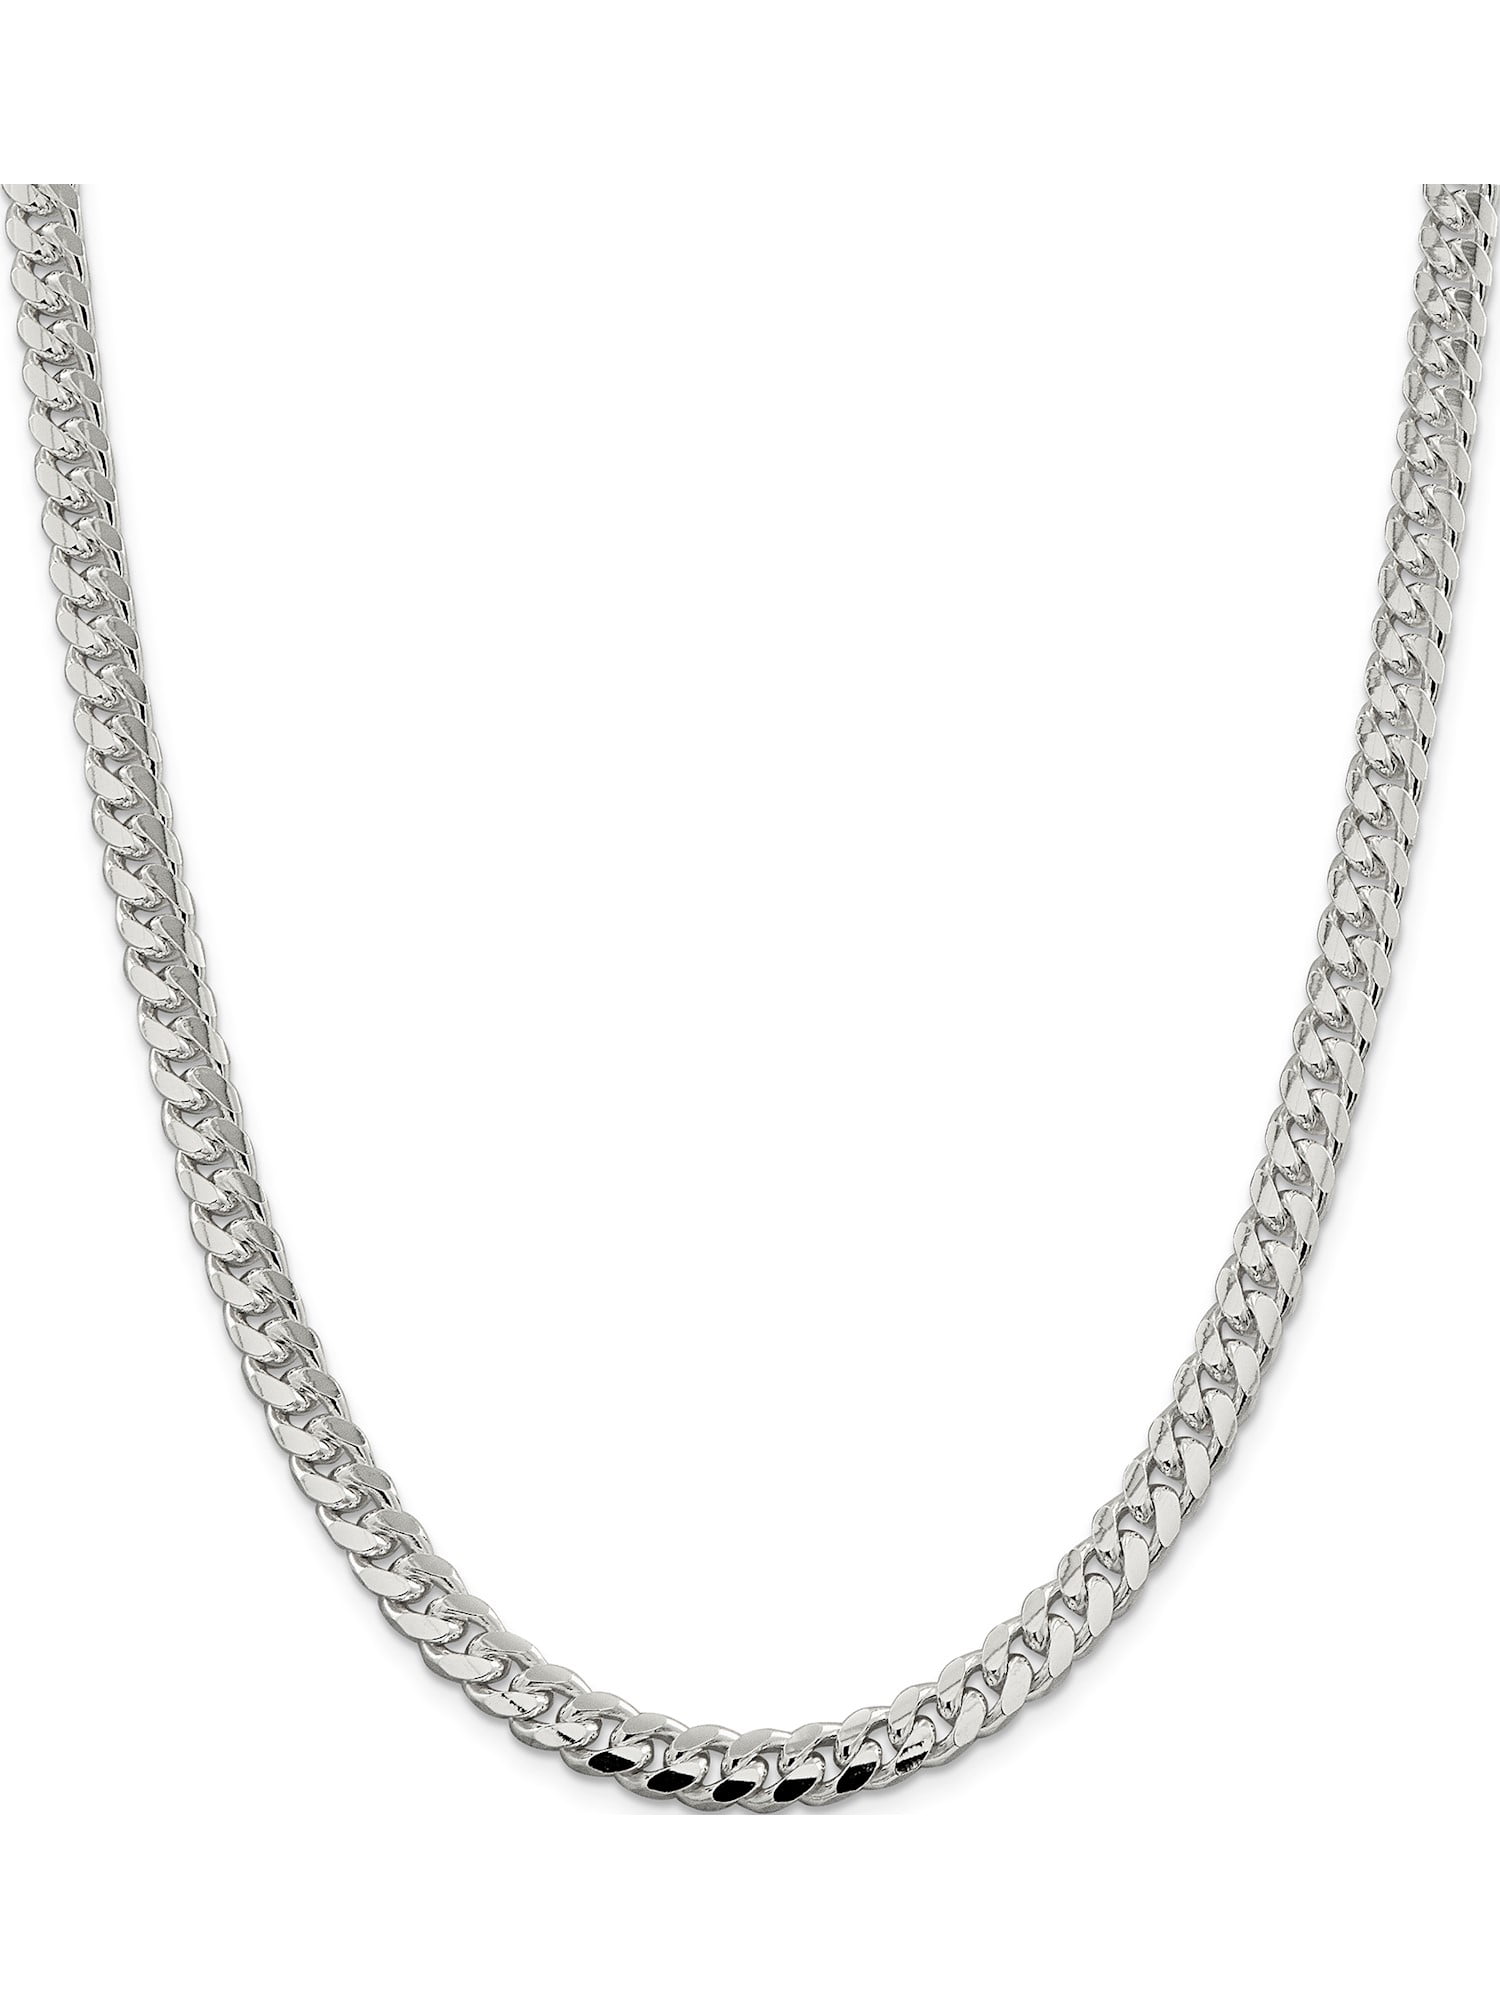 Kezef Gold Plated 925 Sterling Silver 1.8 mm Curb Chain Necklace Bracelet Anklet